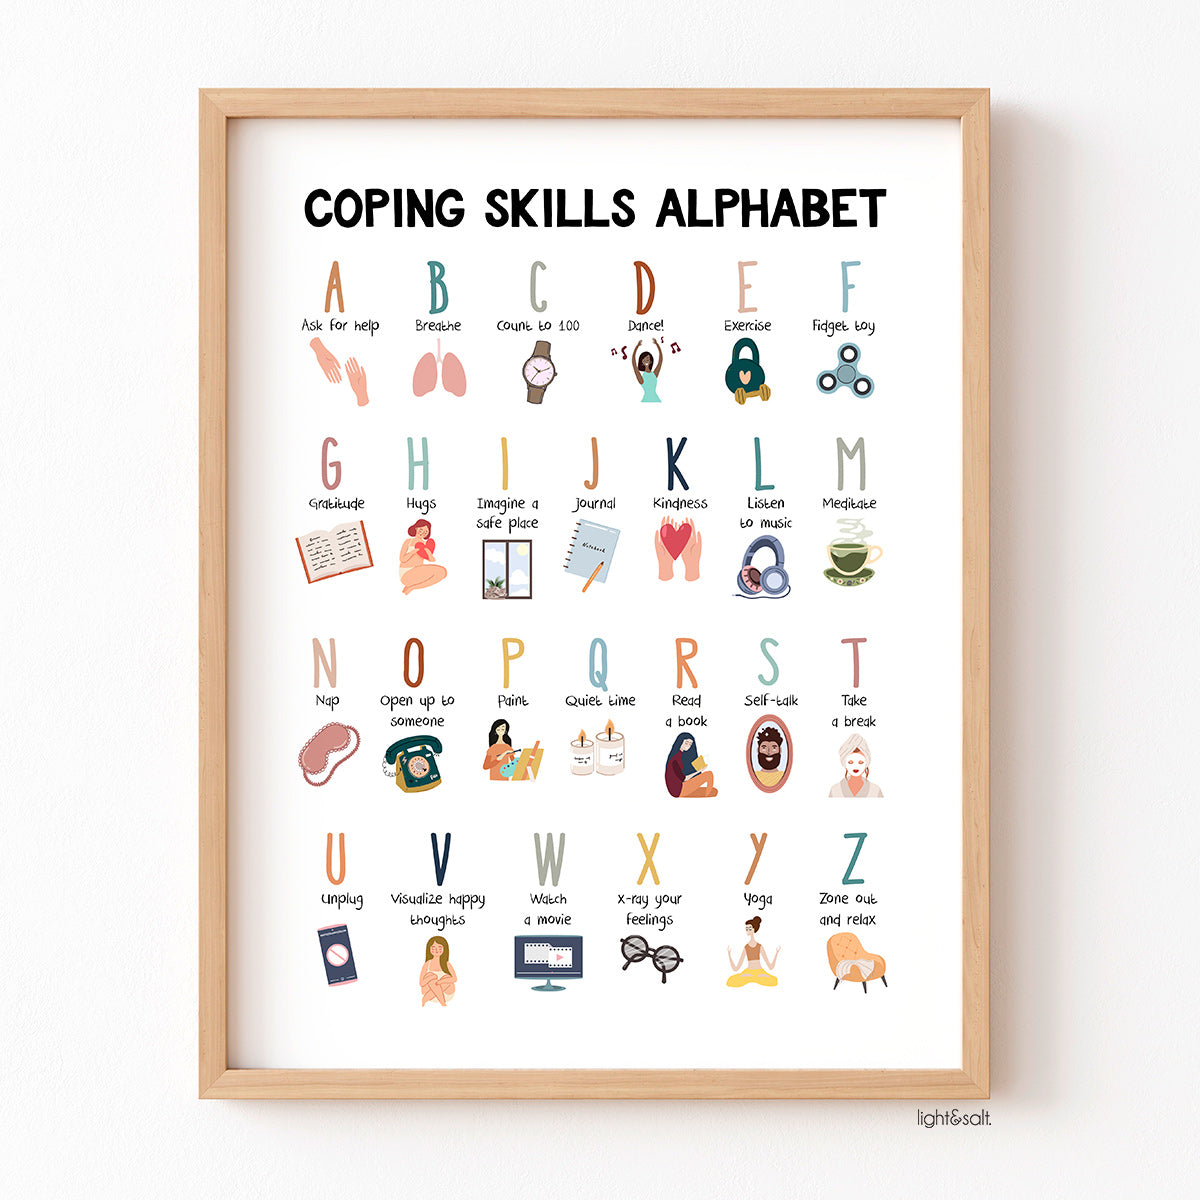 Coping skills alphabet poster